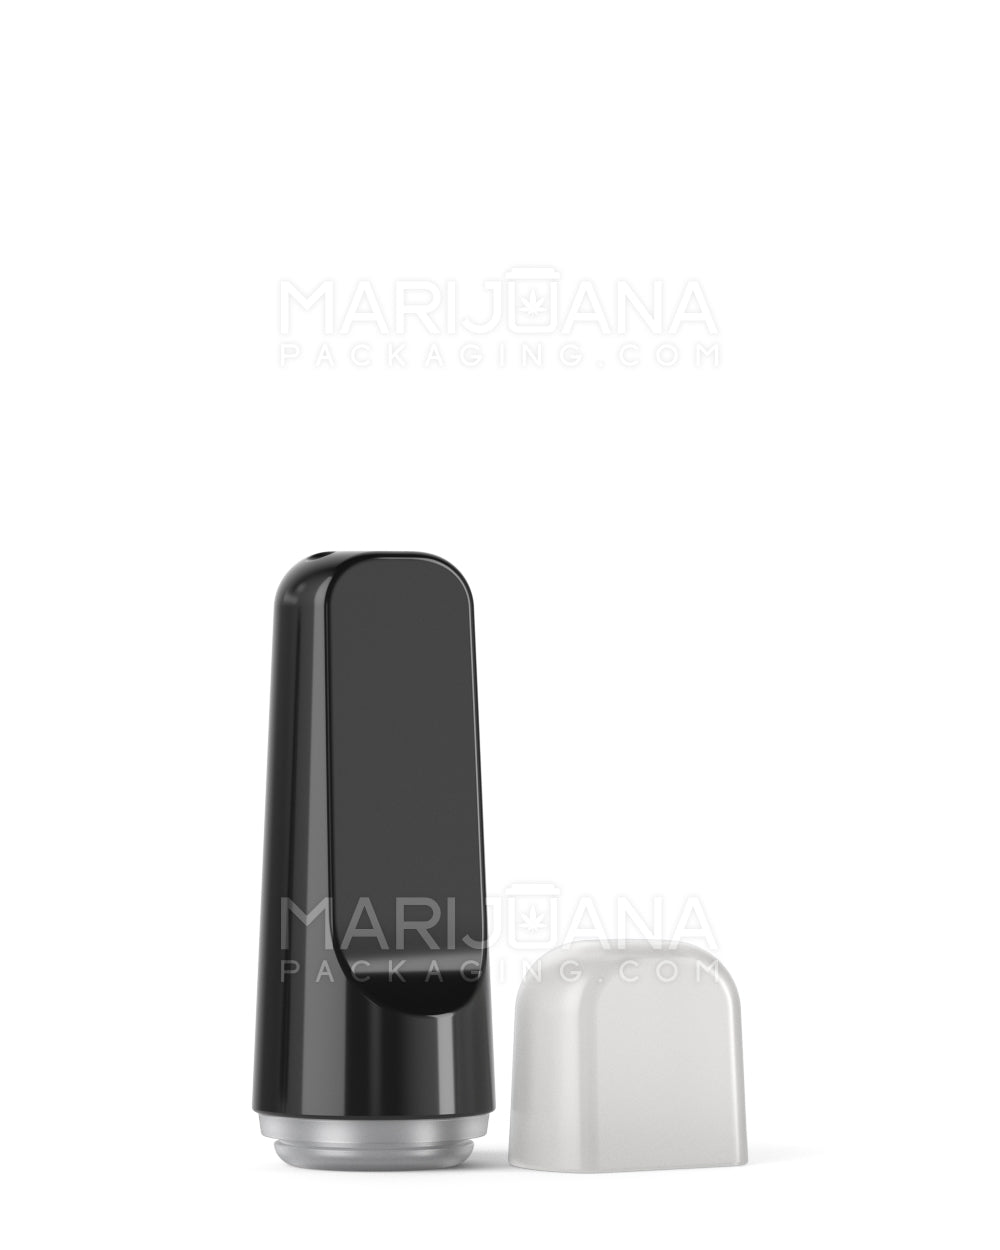 RAE | Flat Vape Mouthpiece for Arbor Press Plastic Cartridges | Black Plastic - Arbor Press - 100 Count